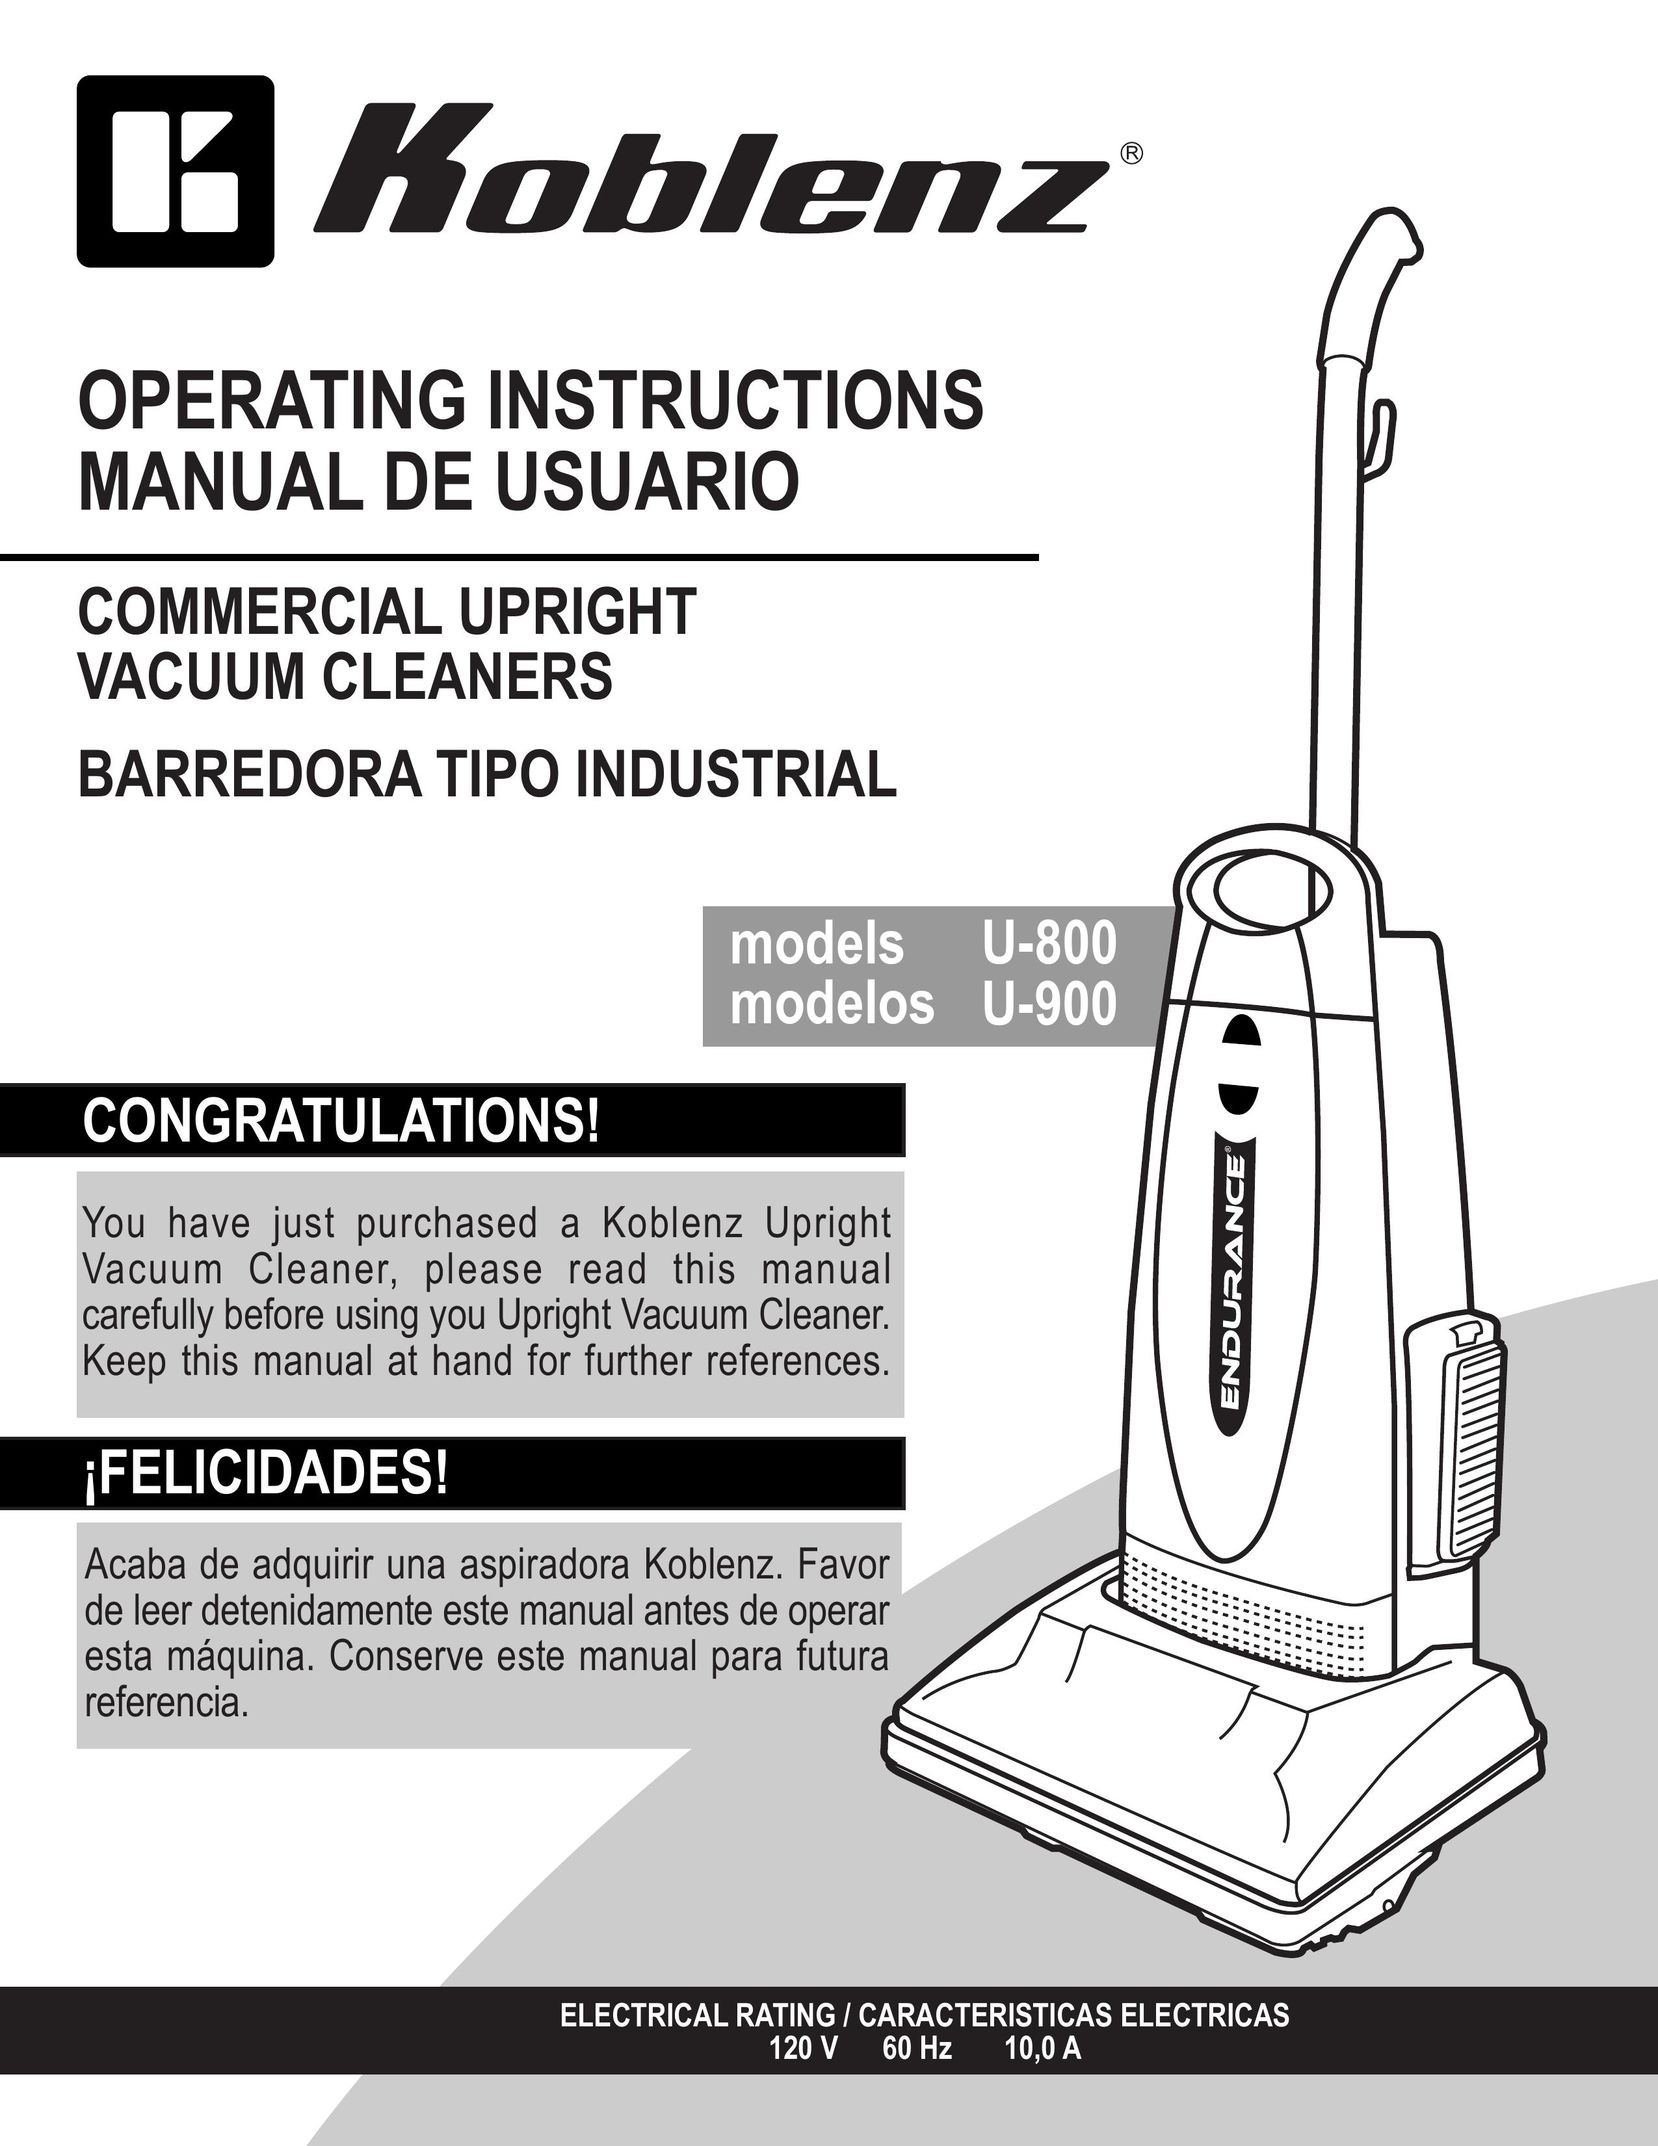 Koblenz/Thorne Electric U-900 Vacuum Cleaner User Manual